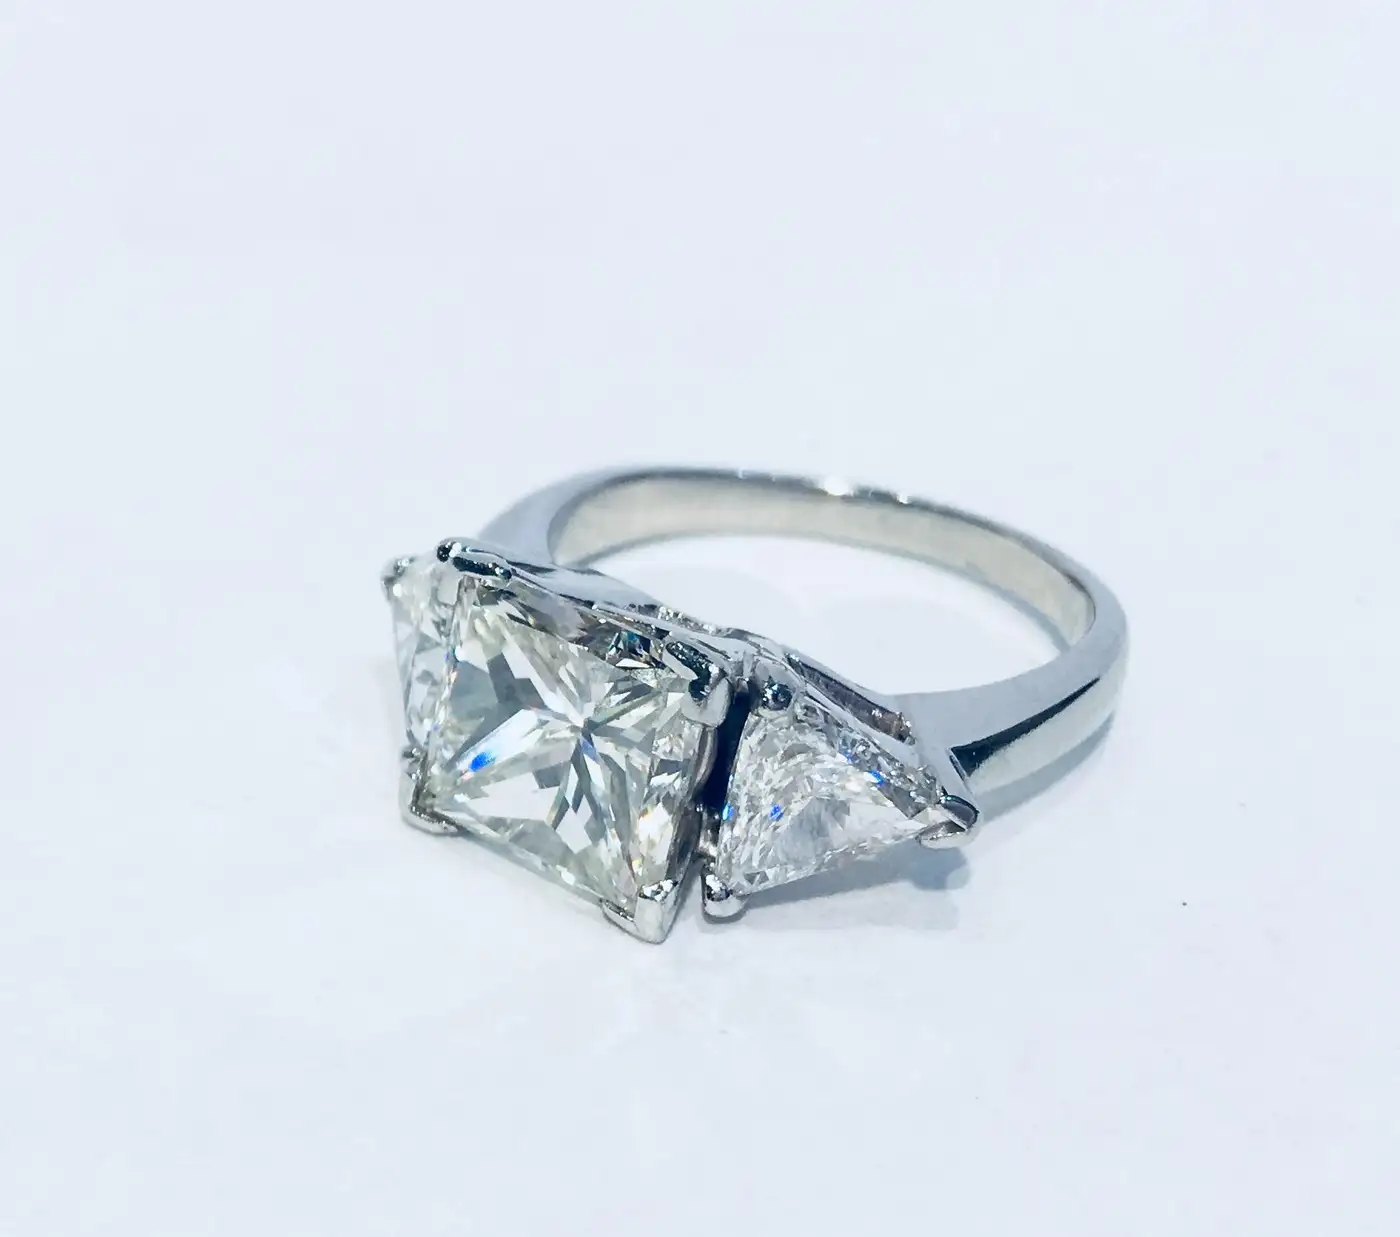 Princess-Diamond-Ring-With-2-Carat-Diamond-Sides-GIA-Certified-VS2-4.13-Carat-10.webp